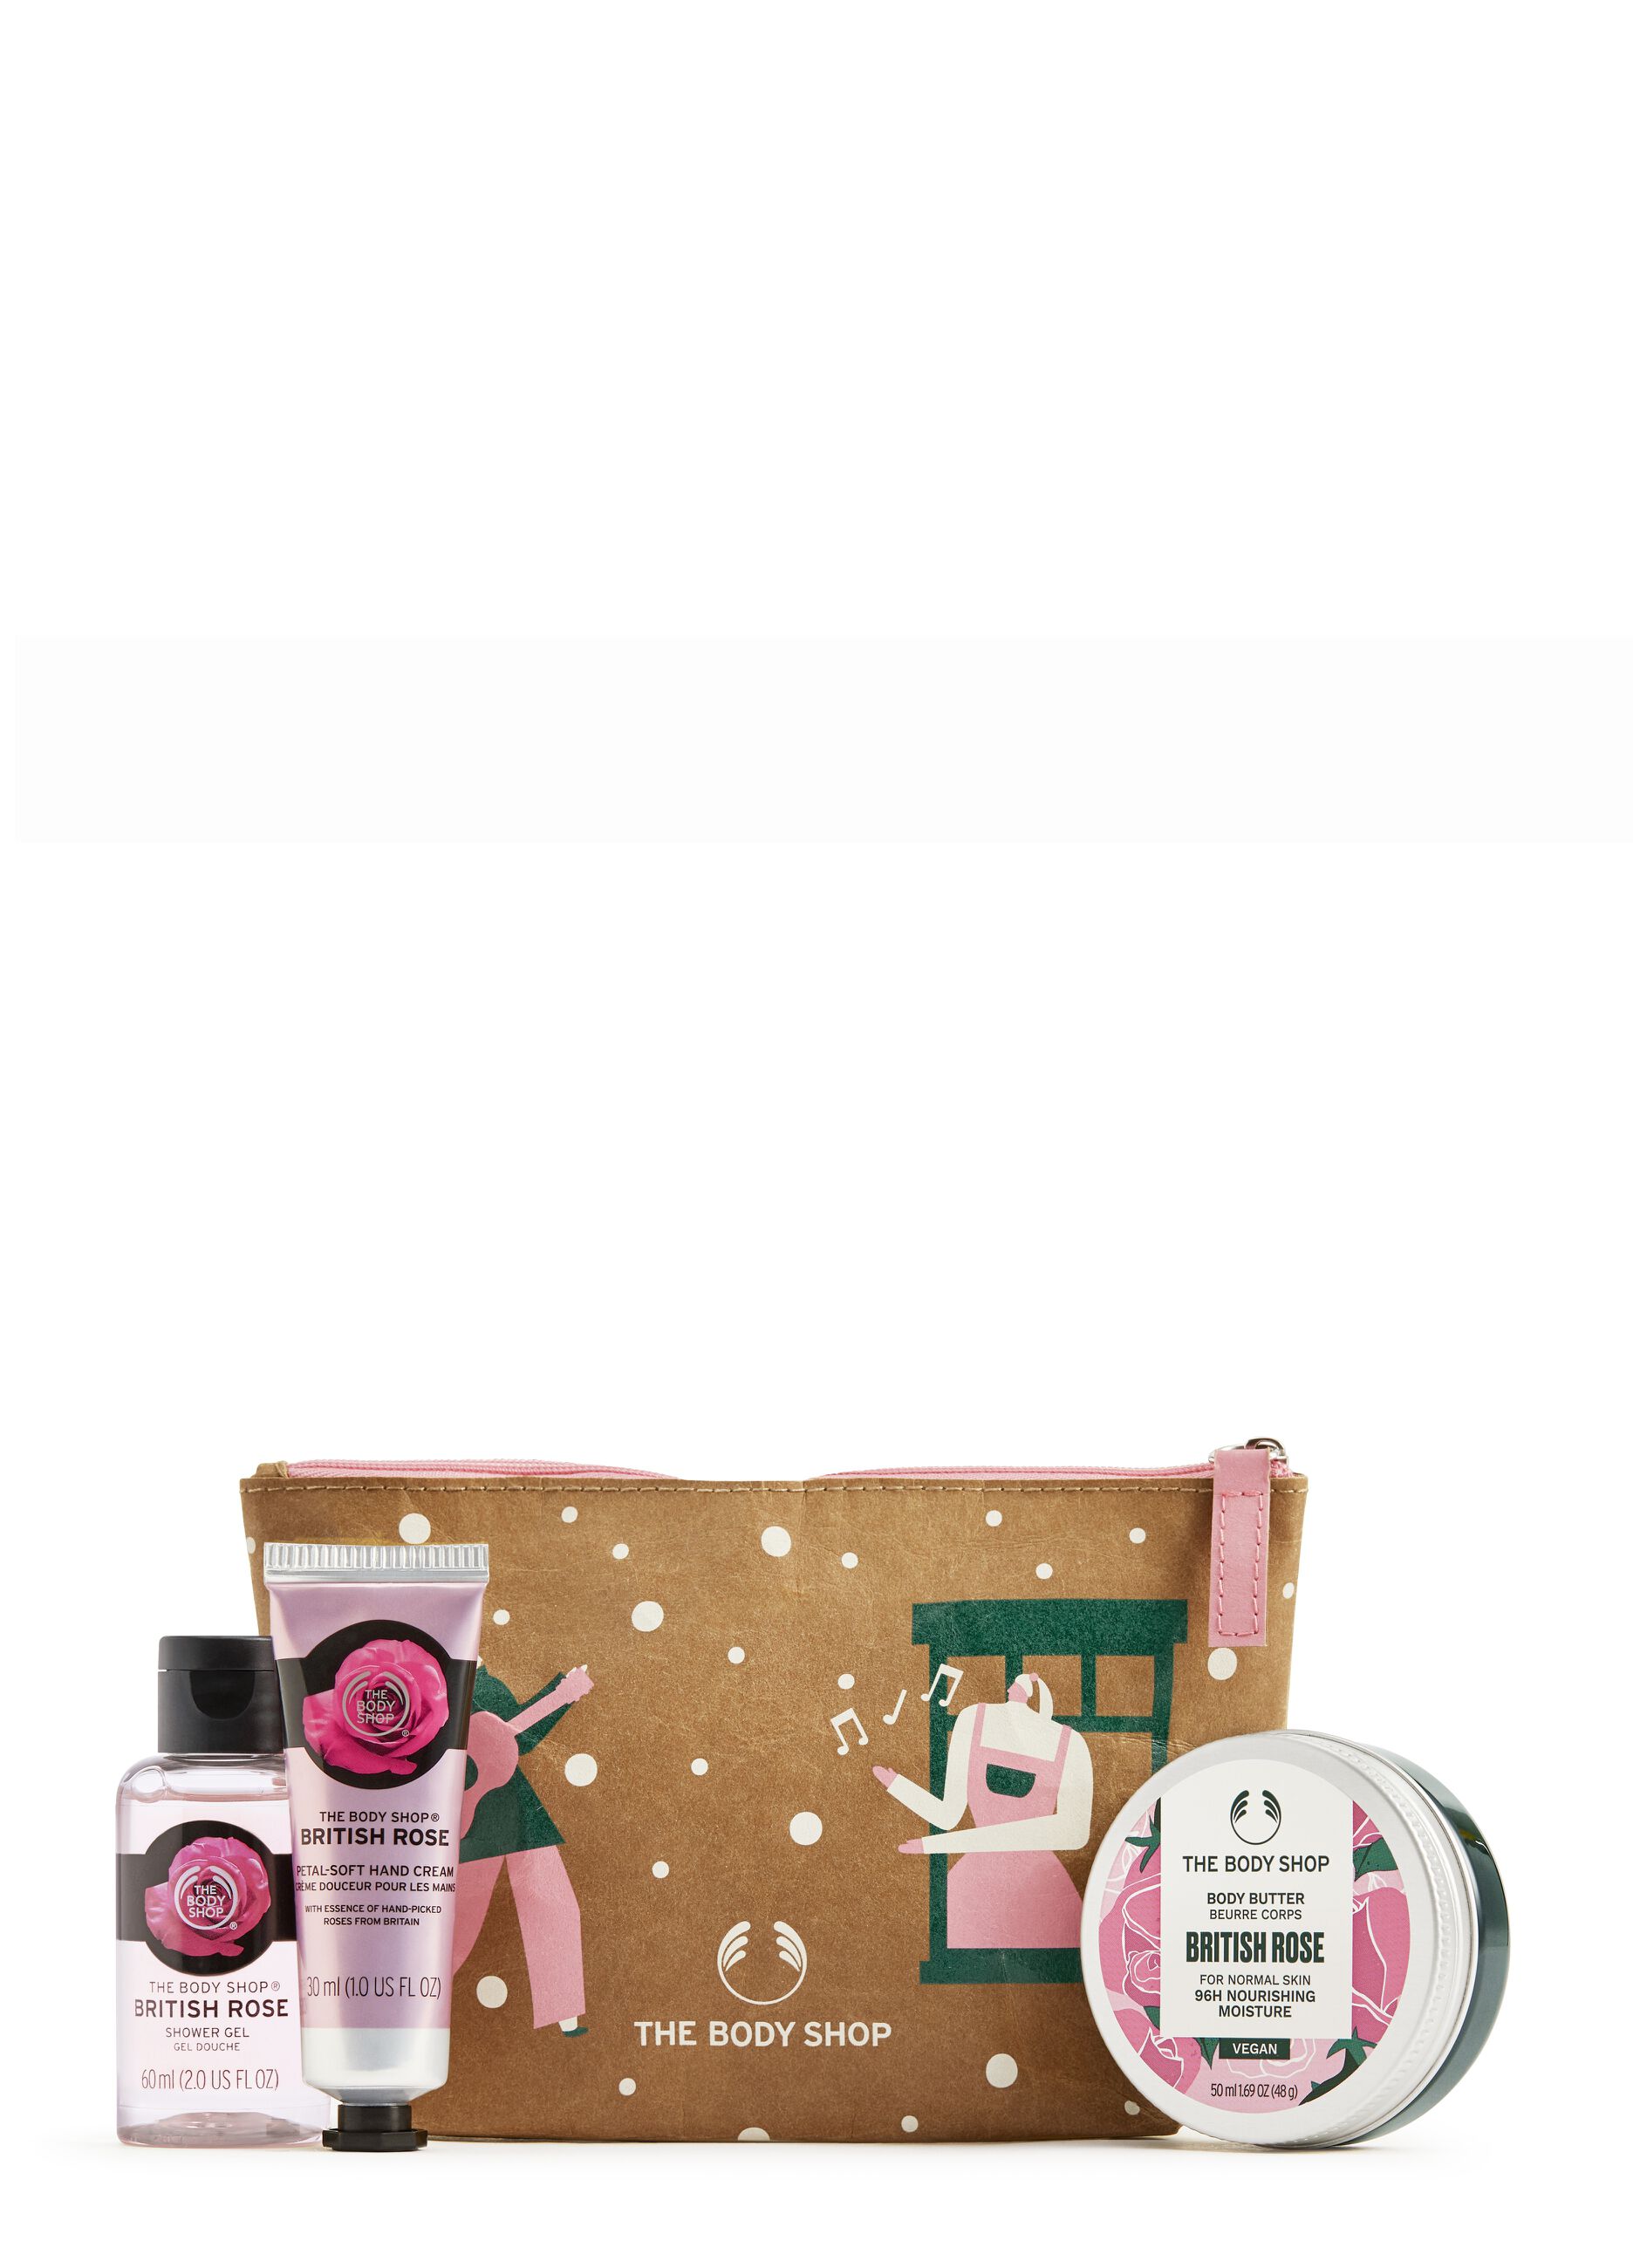 The Body Shop British Rose Bloom & Glow gift bag